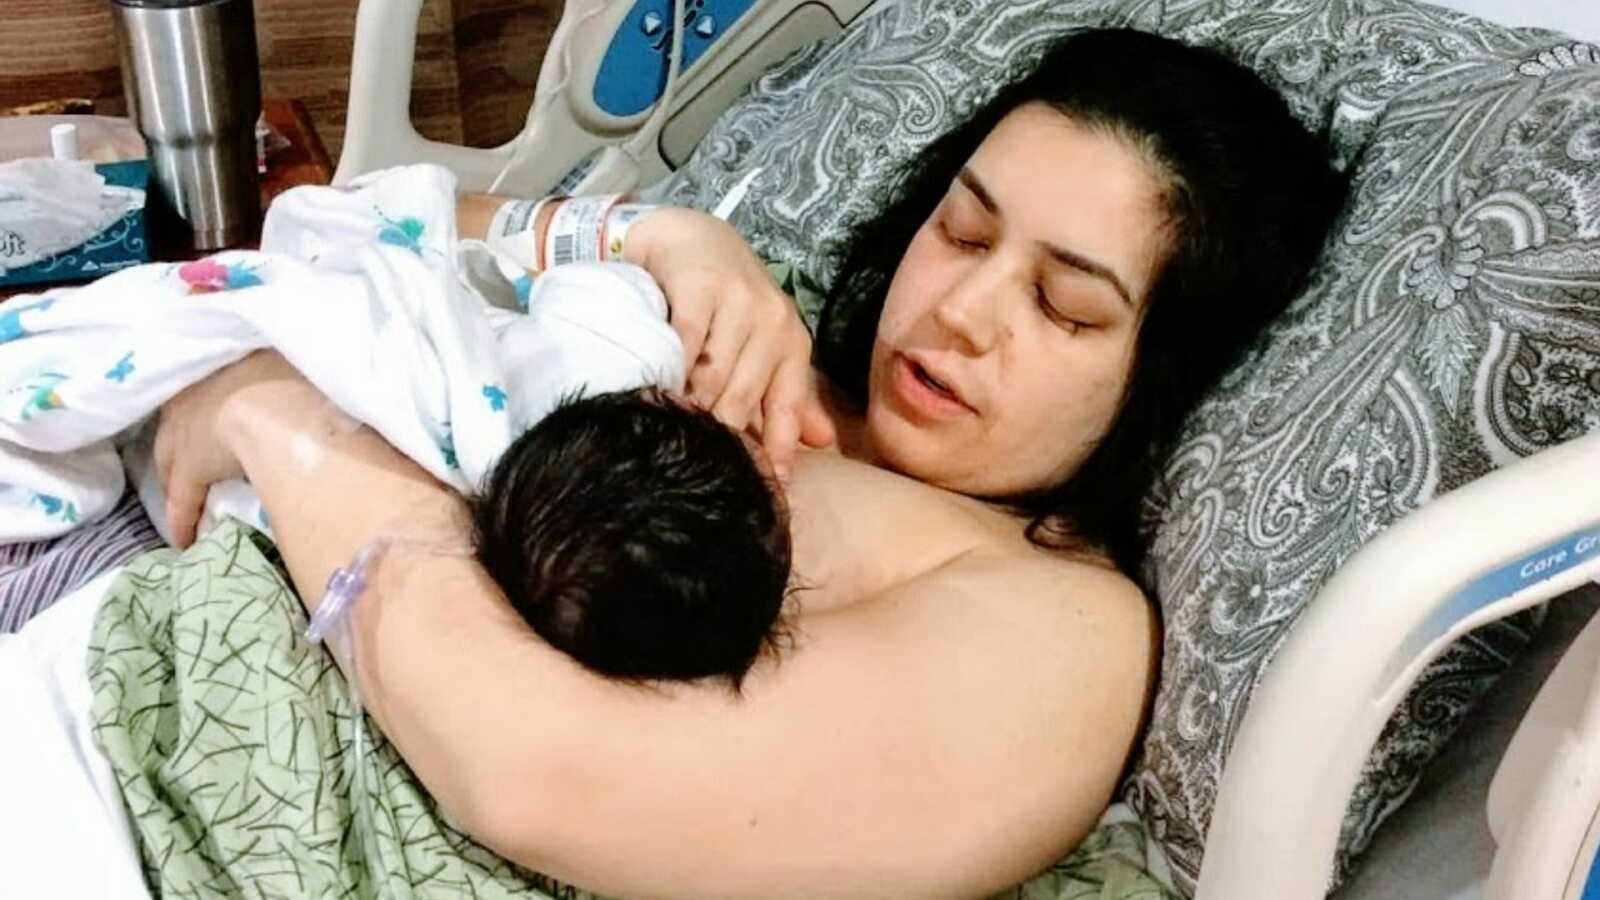 Woman lies in hospital bed breastfeeding baby